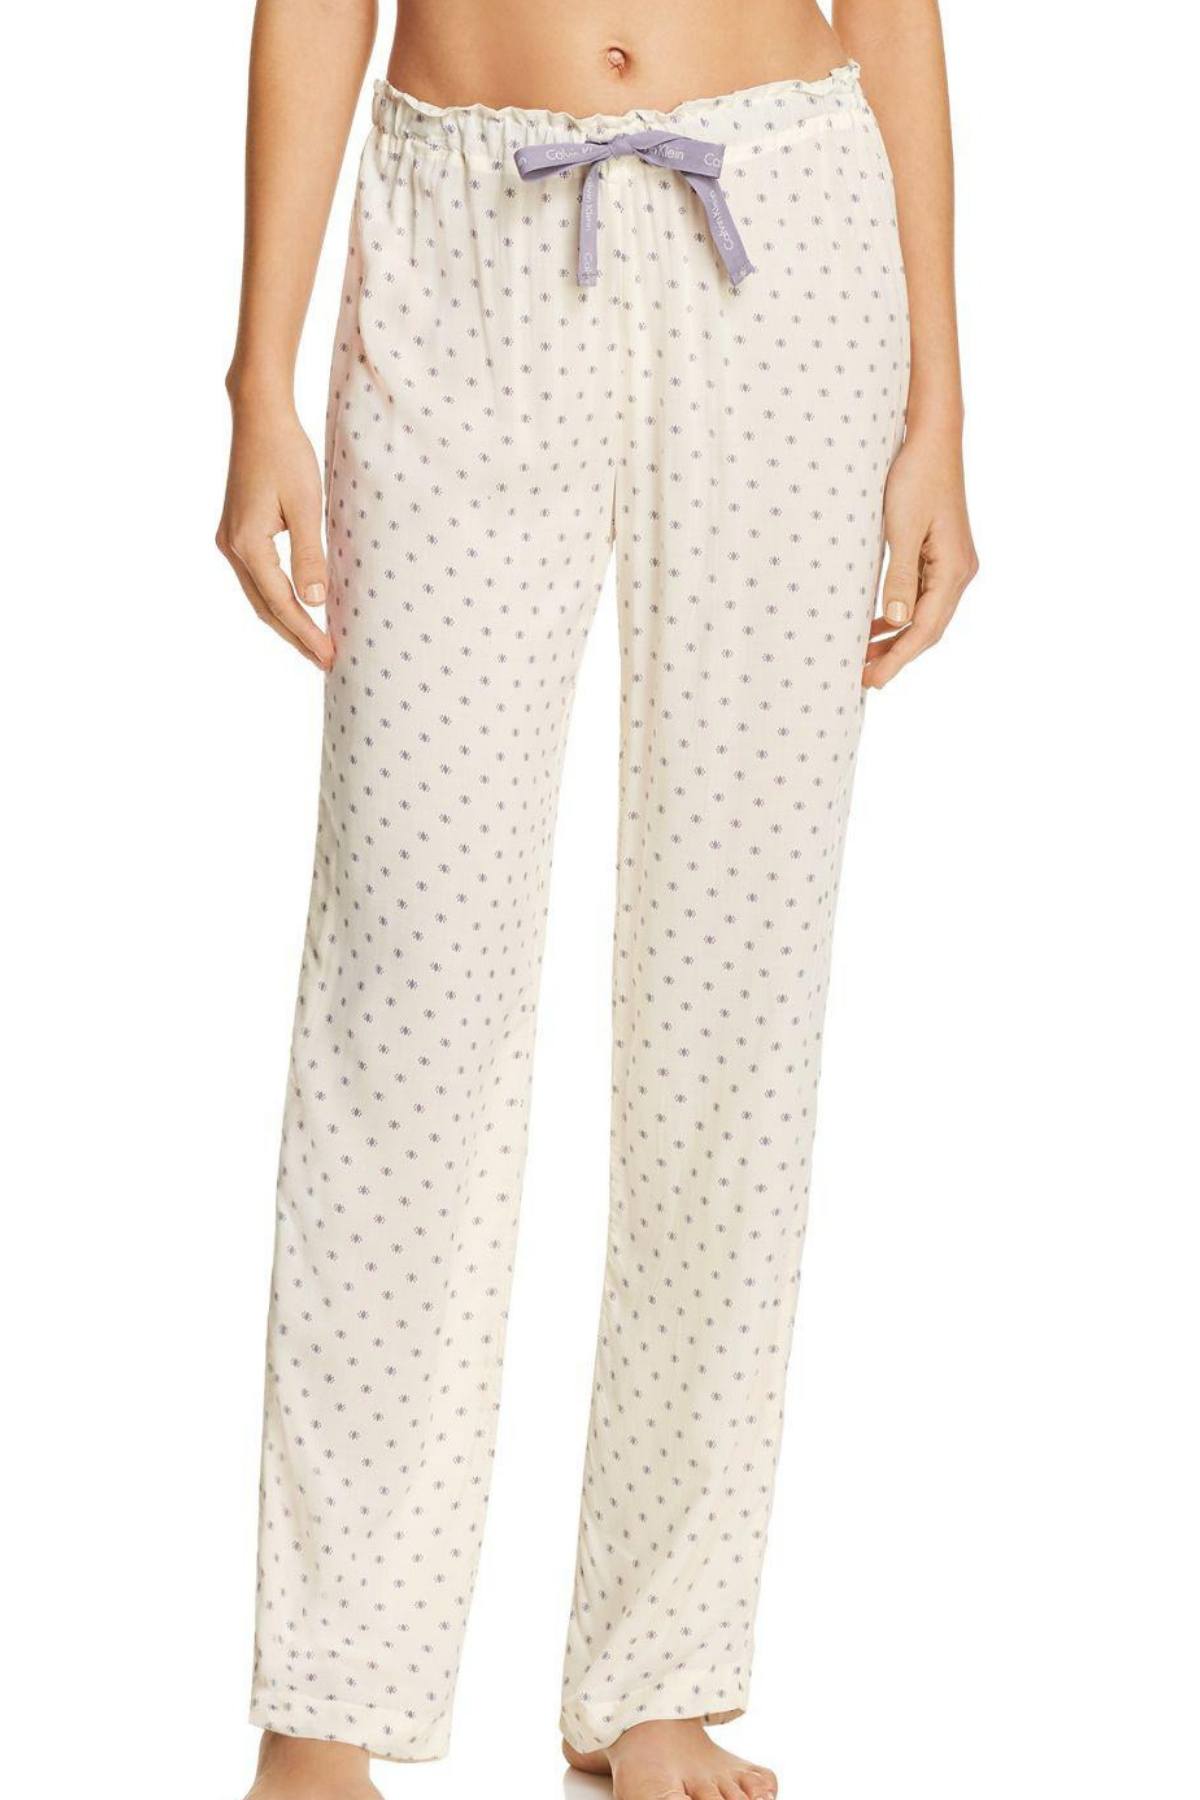 Calvin Klein Sleep Pants Pyjama Bottoms, Dragon Fly, XS